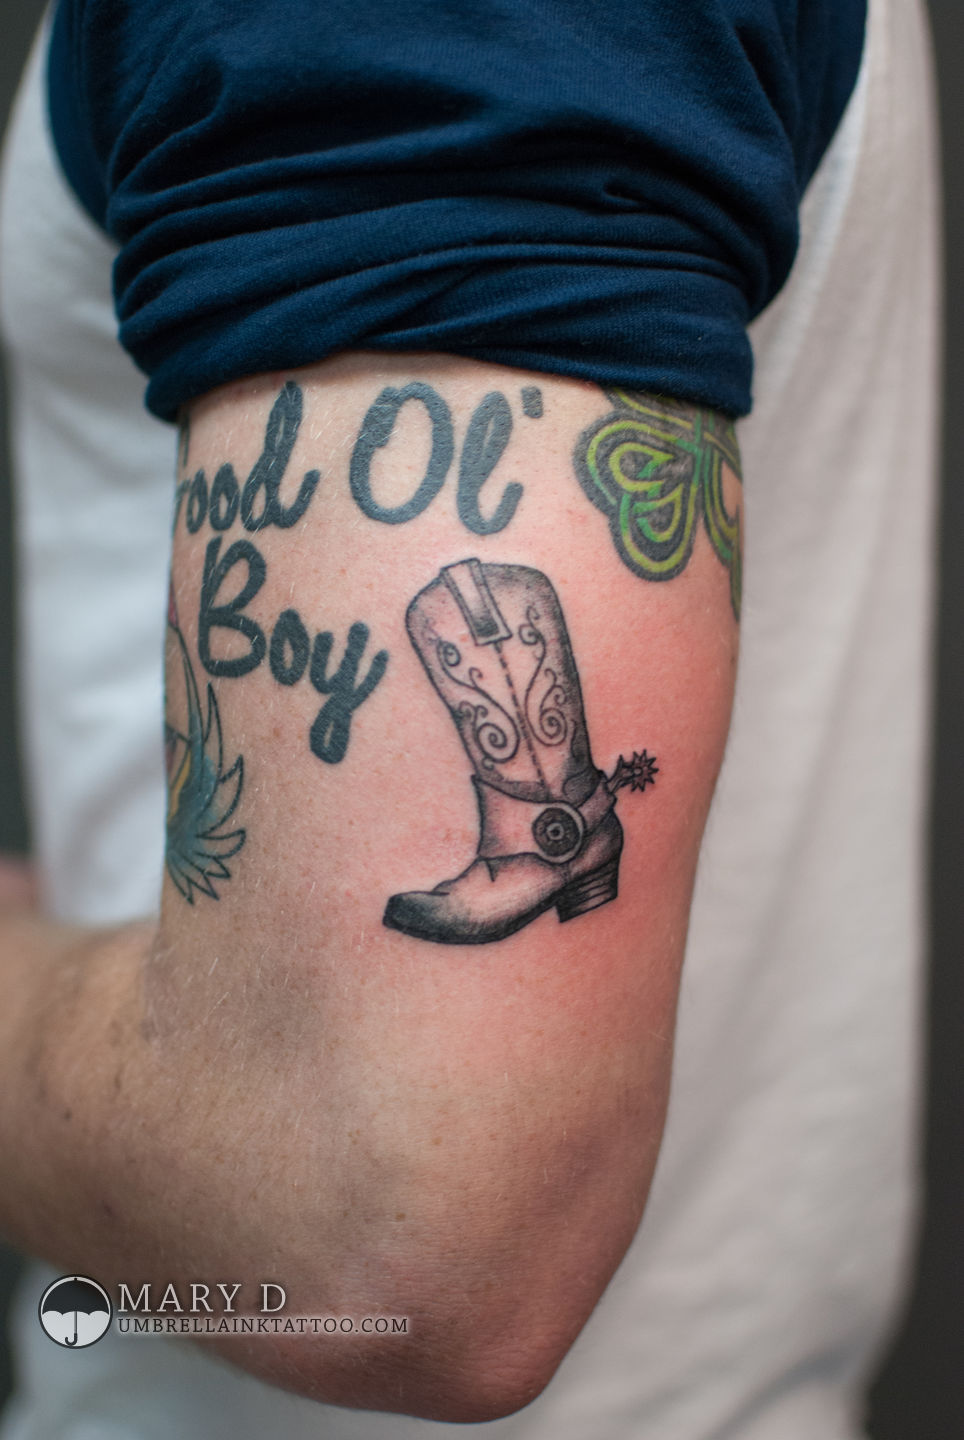 cowboy boots cactus tattoo  Nashville Ink Tattoo  فيسبوك